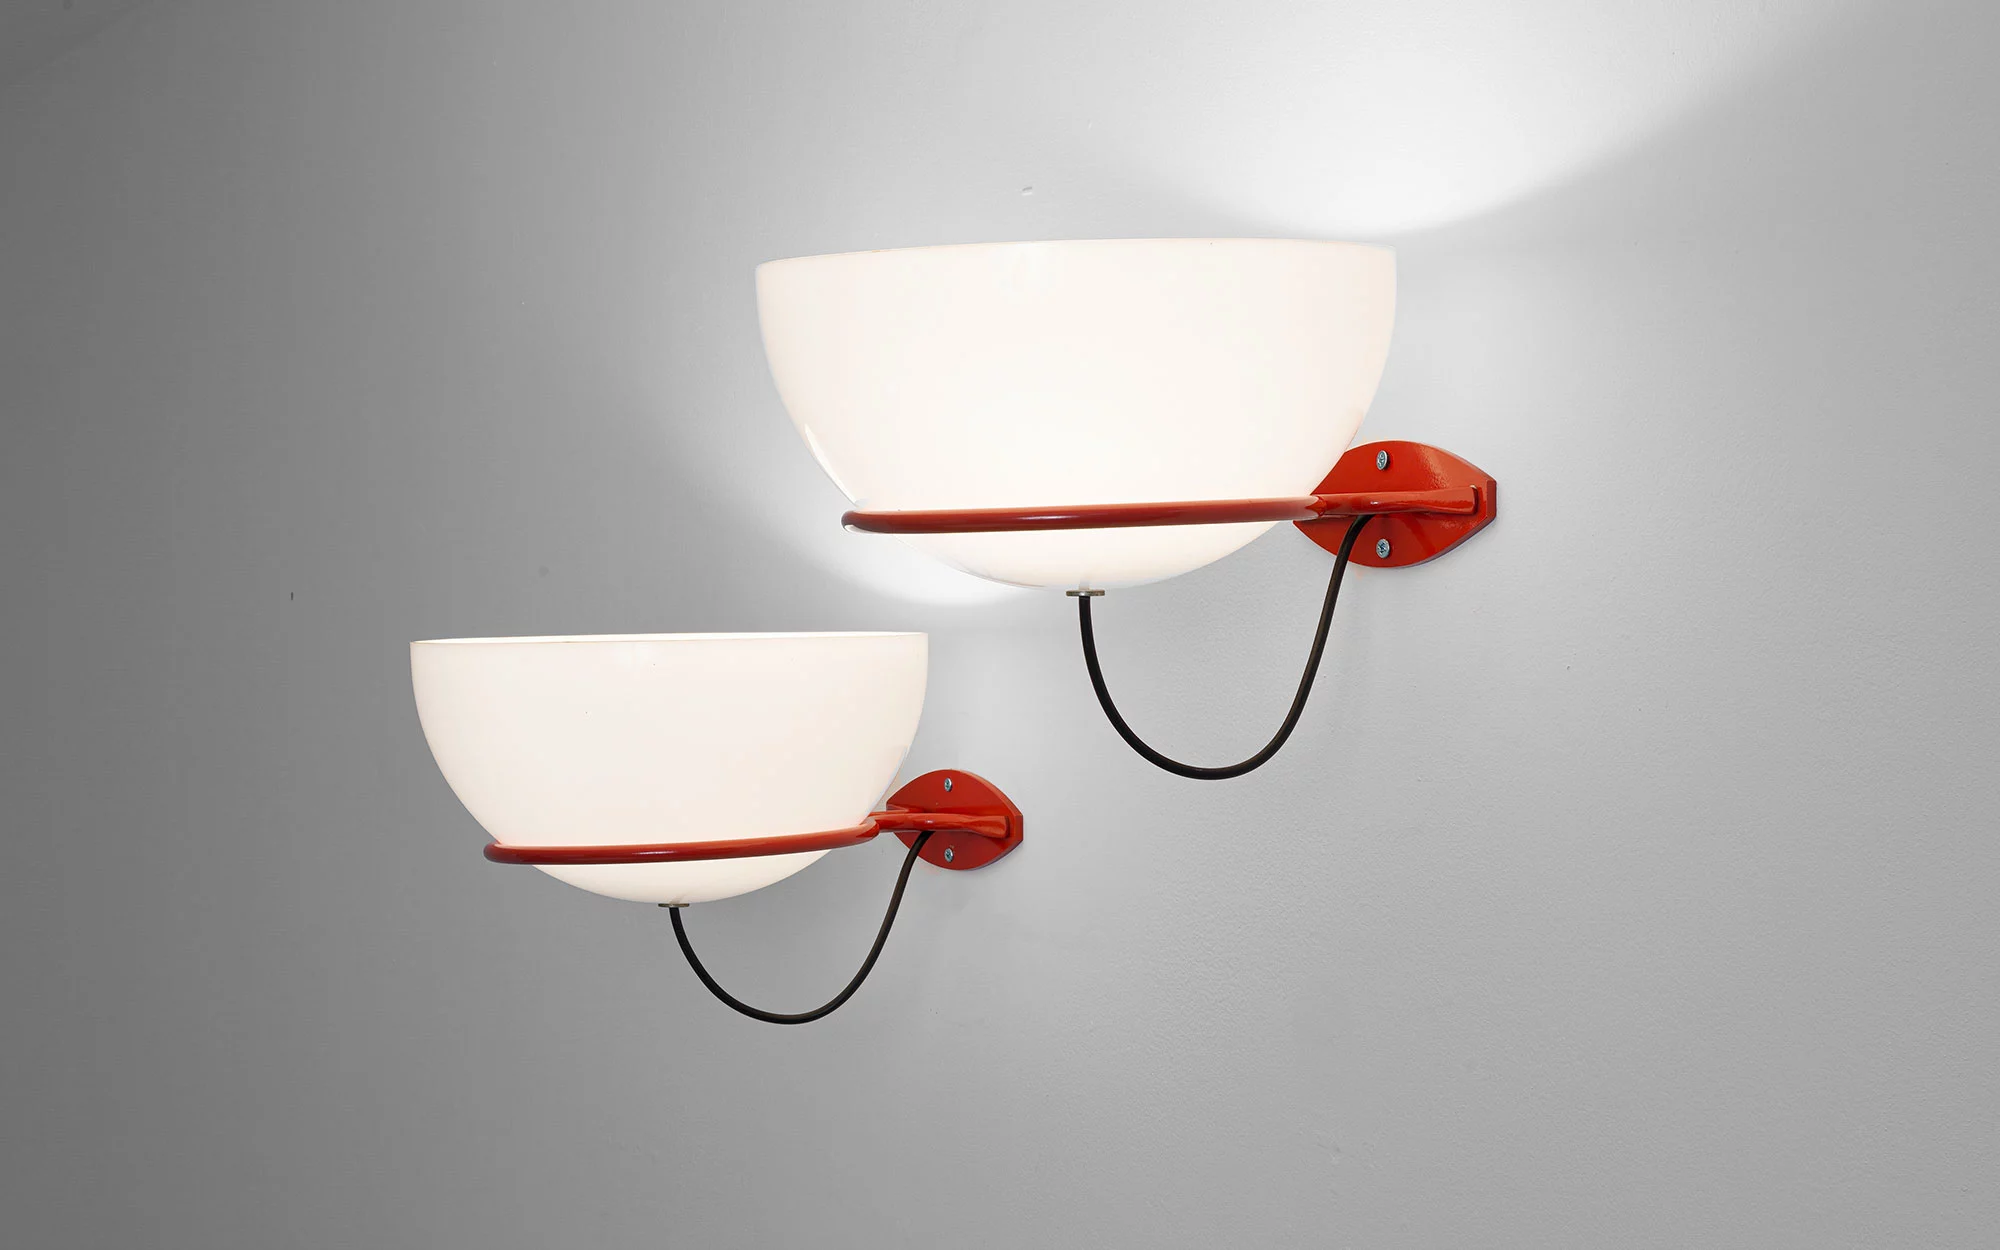 2/2 PX (red) - Gino Sarfatti - Ceiling light - Galerie kreo